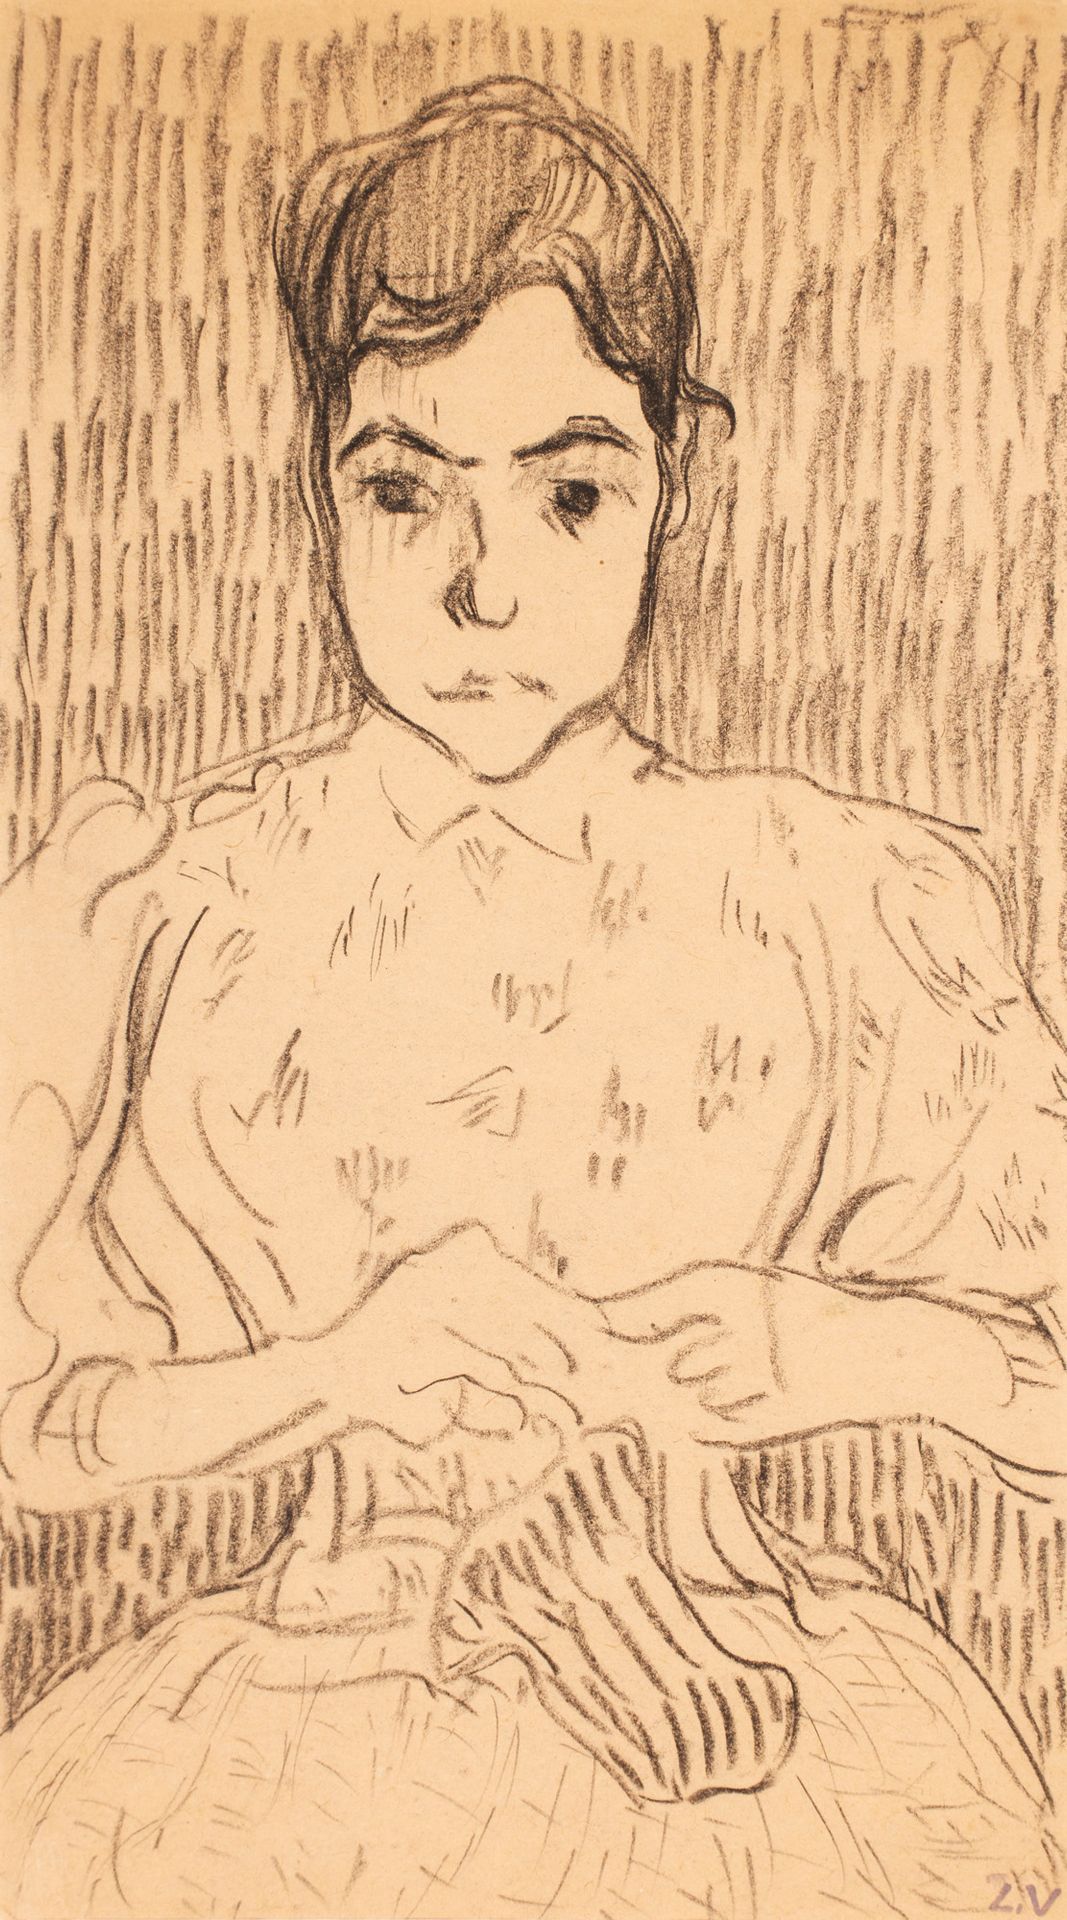 Louis VALTAT ( 1869-1952) 路易斯-瓦尔塔 ( 1869-1952 )

年轻女子编织

素描，右下角盖有单字。

30 x 17 cm